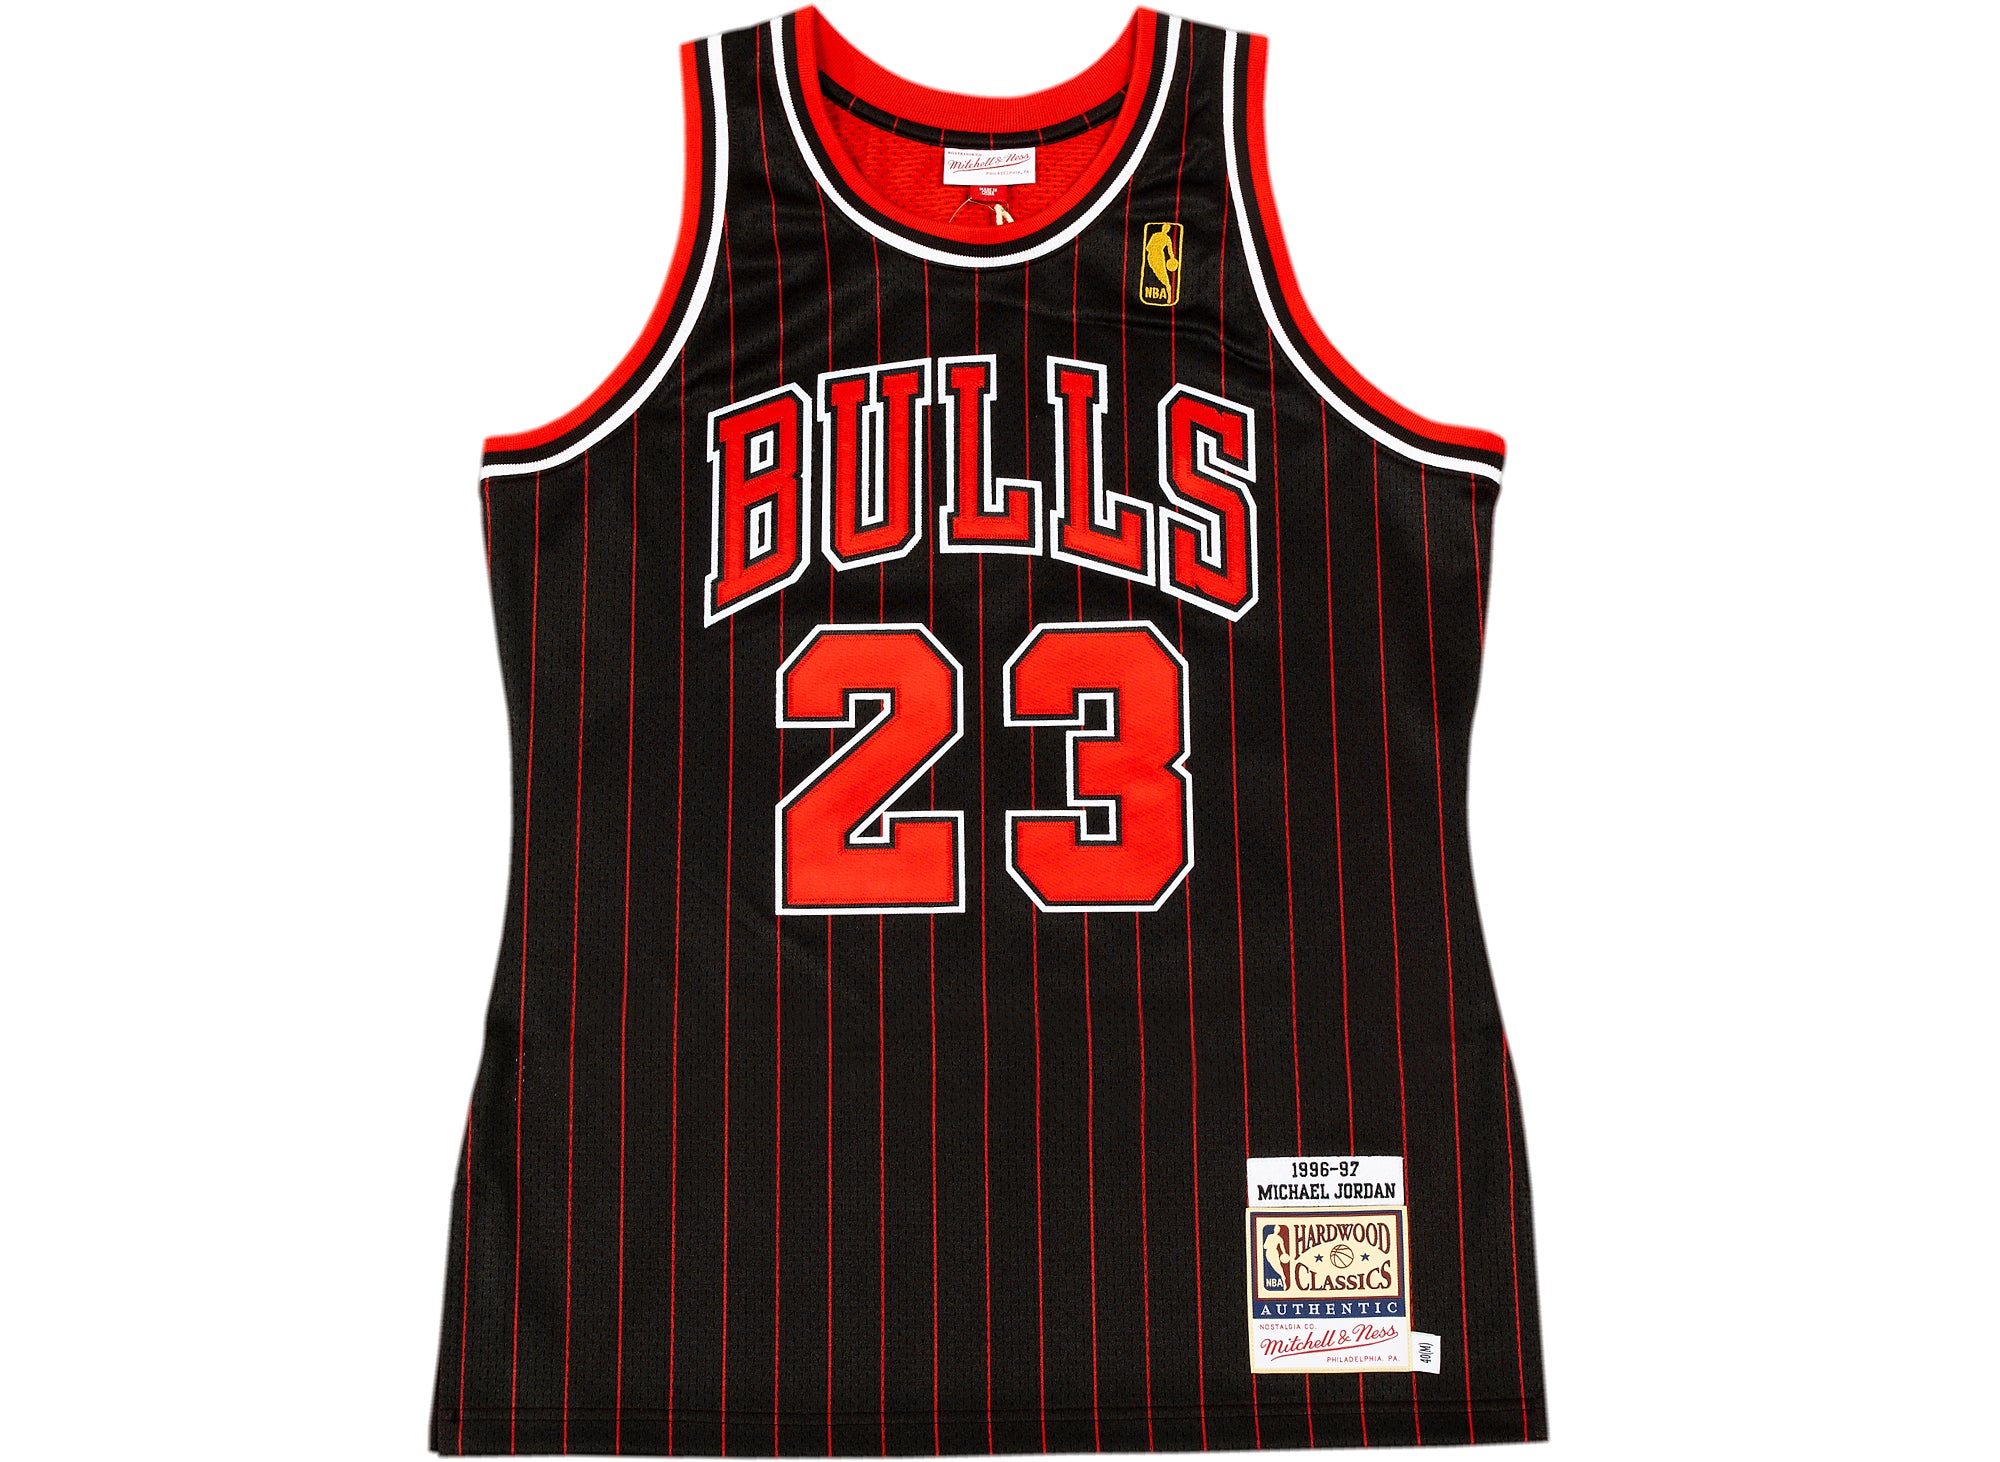 Mitchell & Ness NBA Michael Jordan Authentic Bulls 96 Alternate